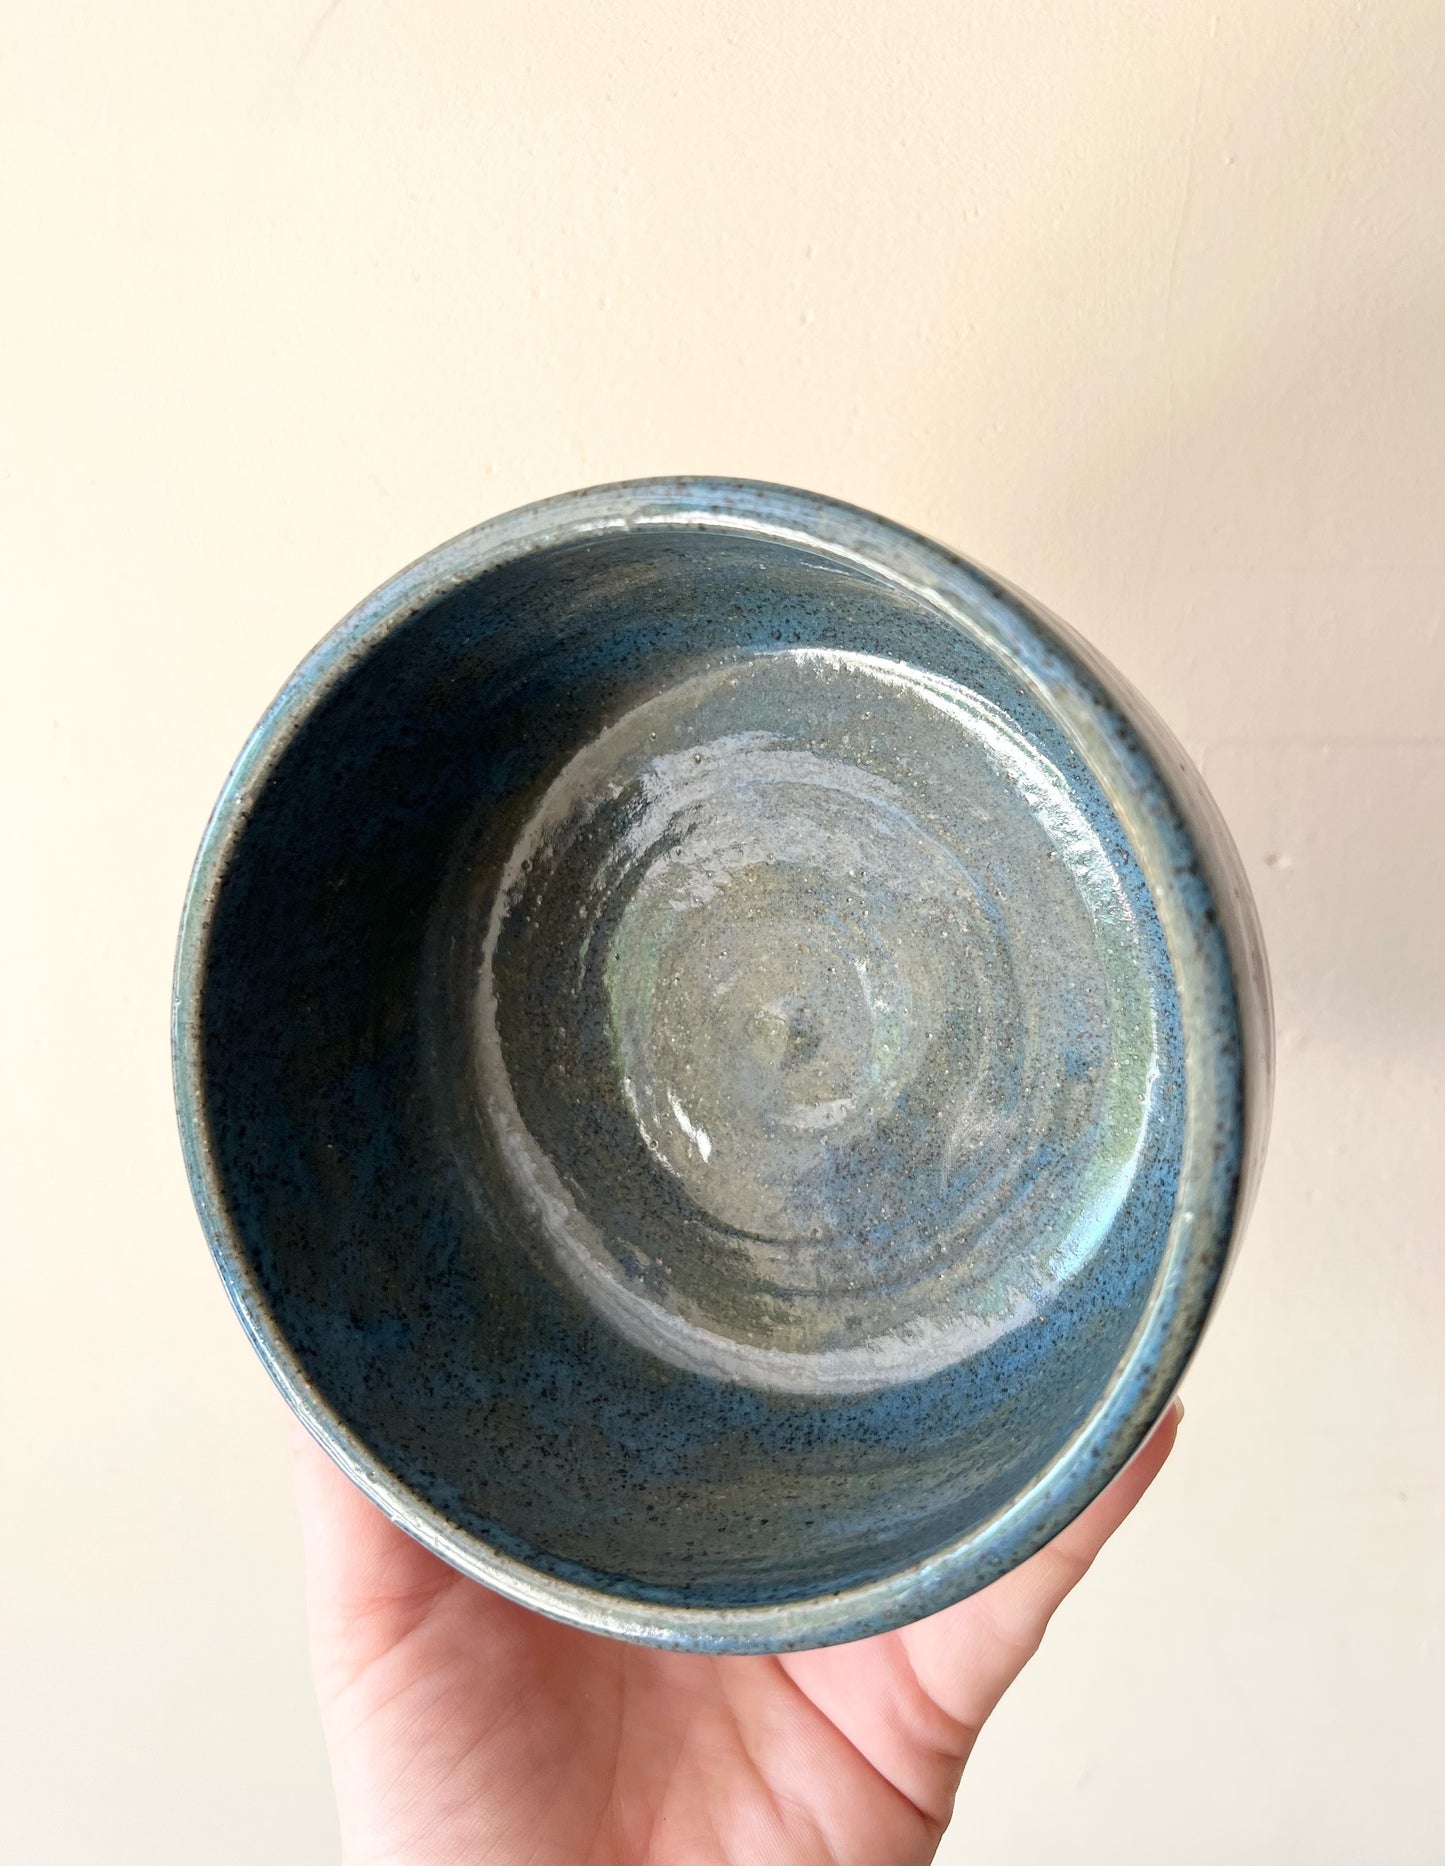 Light Blue Bowl Set